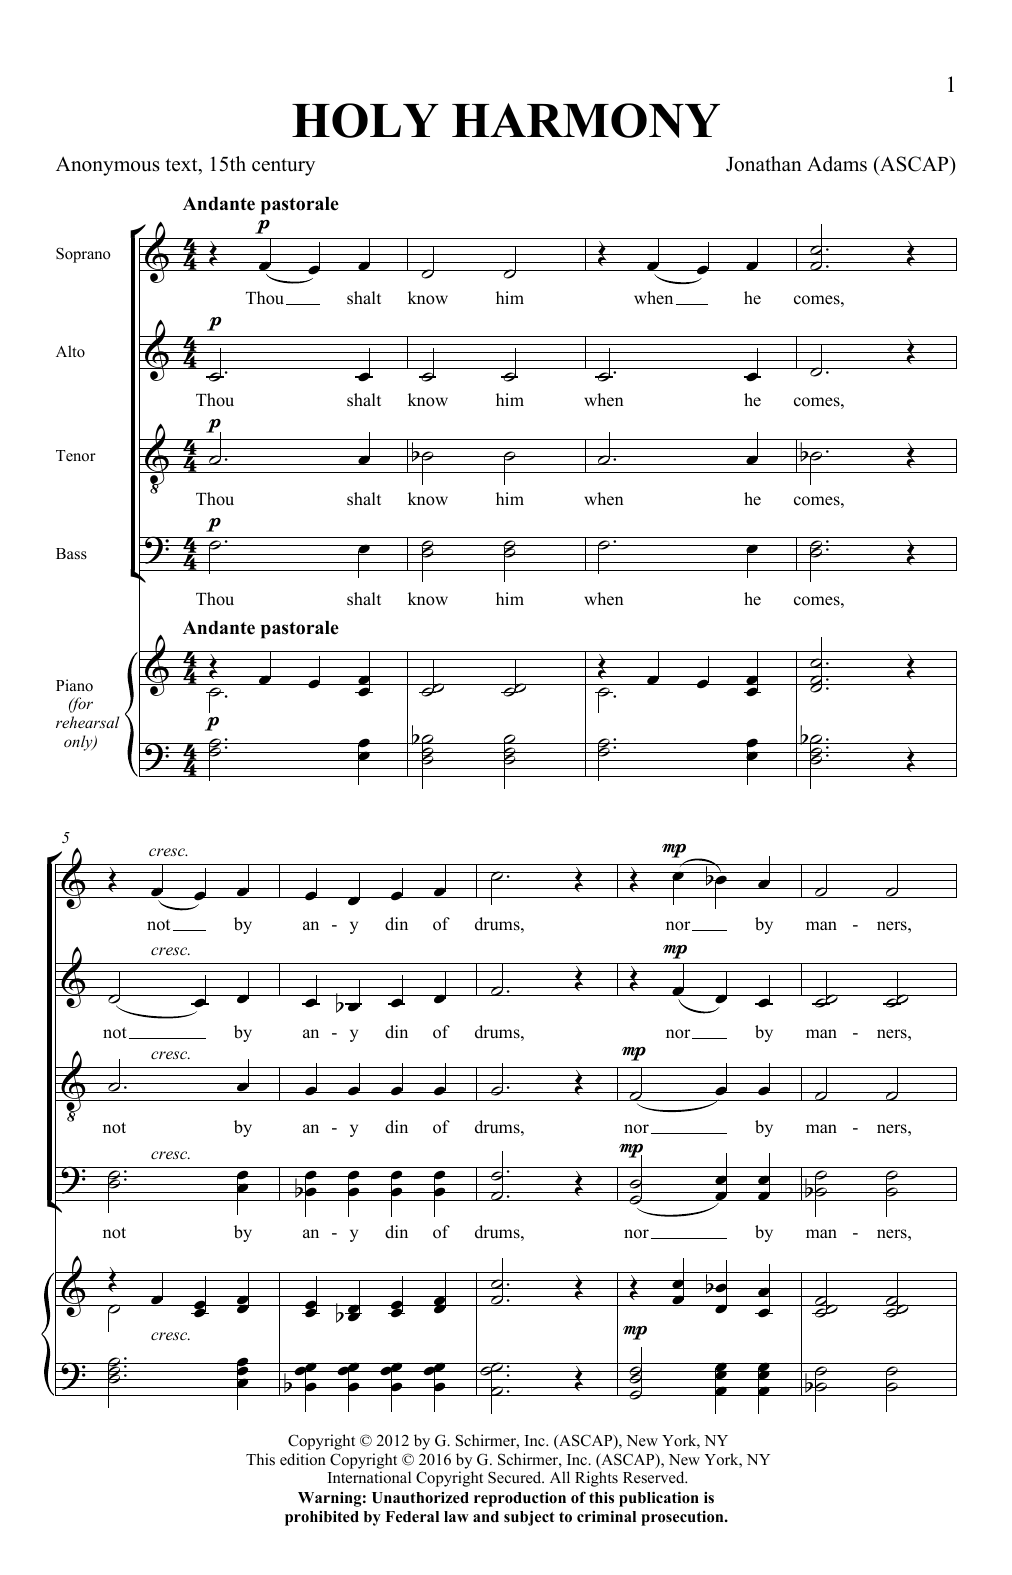 Jonathan Adams Holy Harmony Sheet Music Notes & Chords for SATB - Download or Print PDF